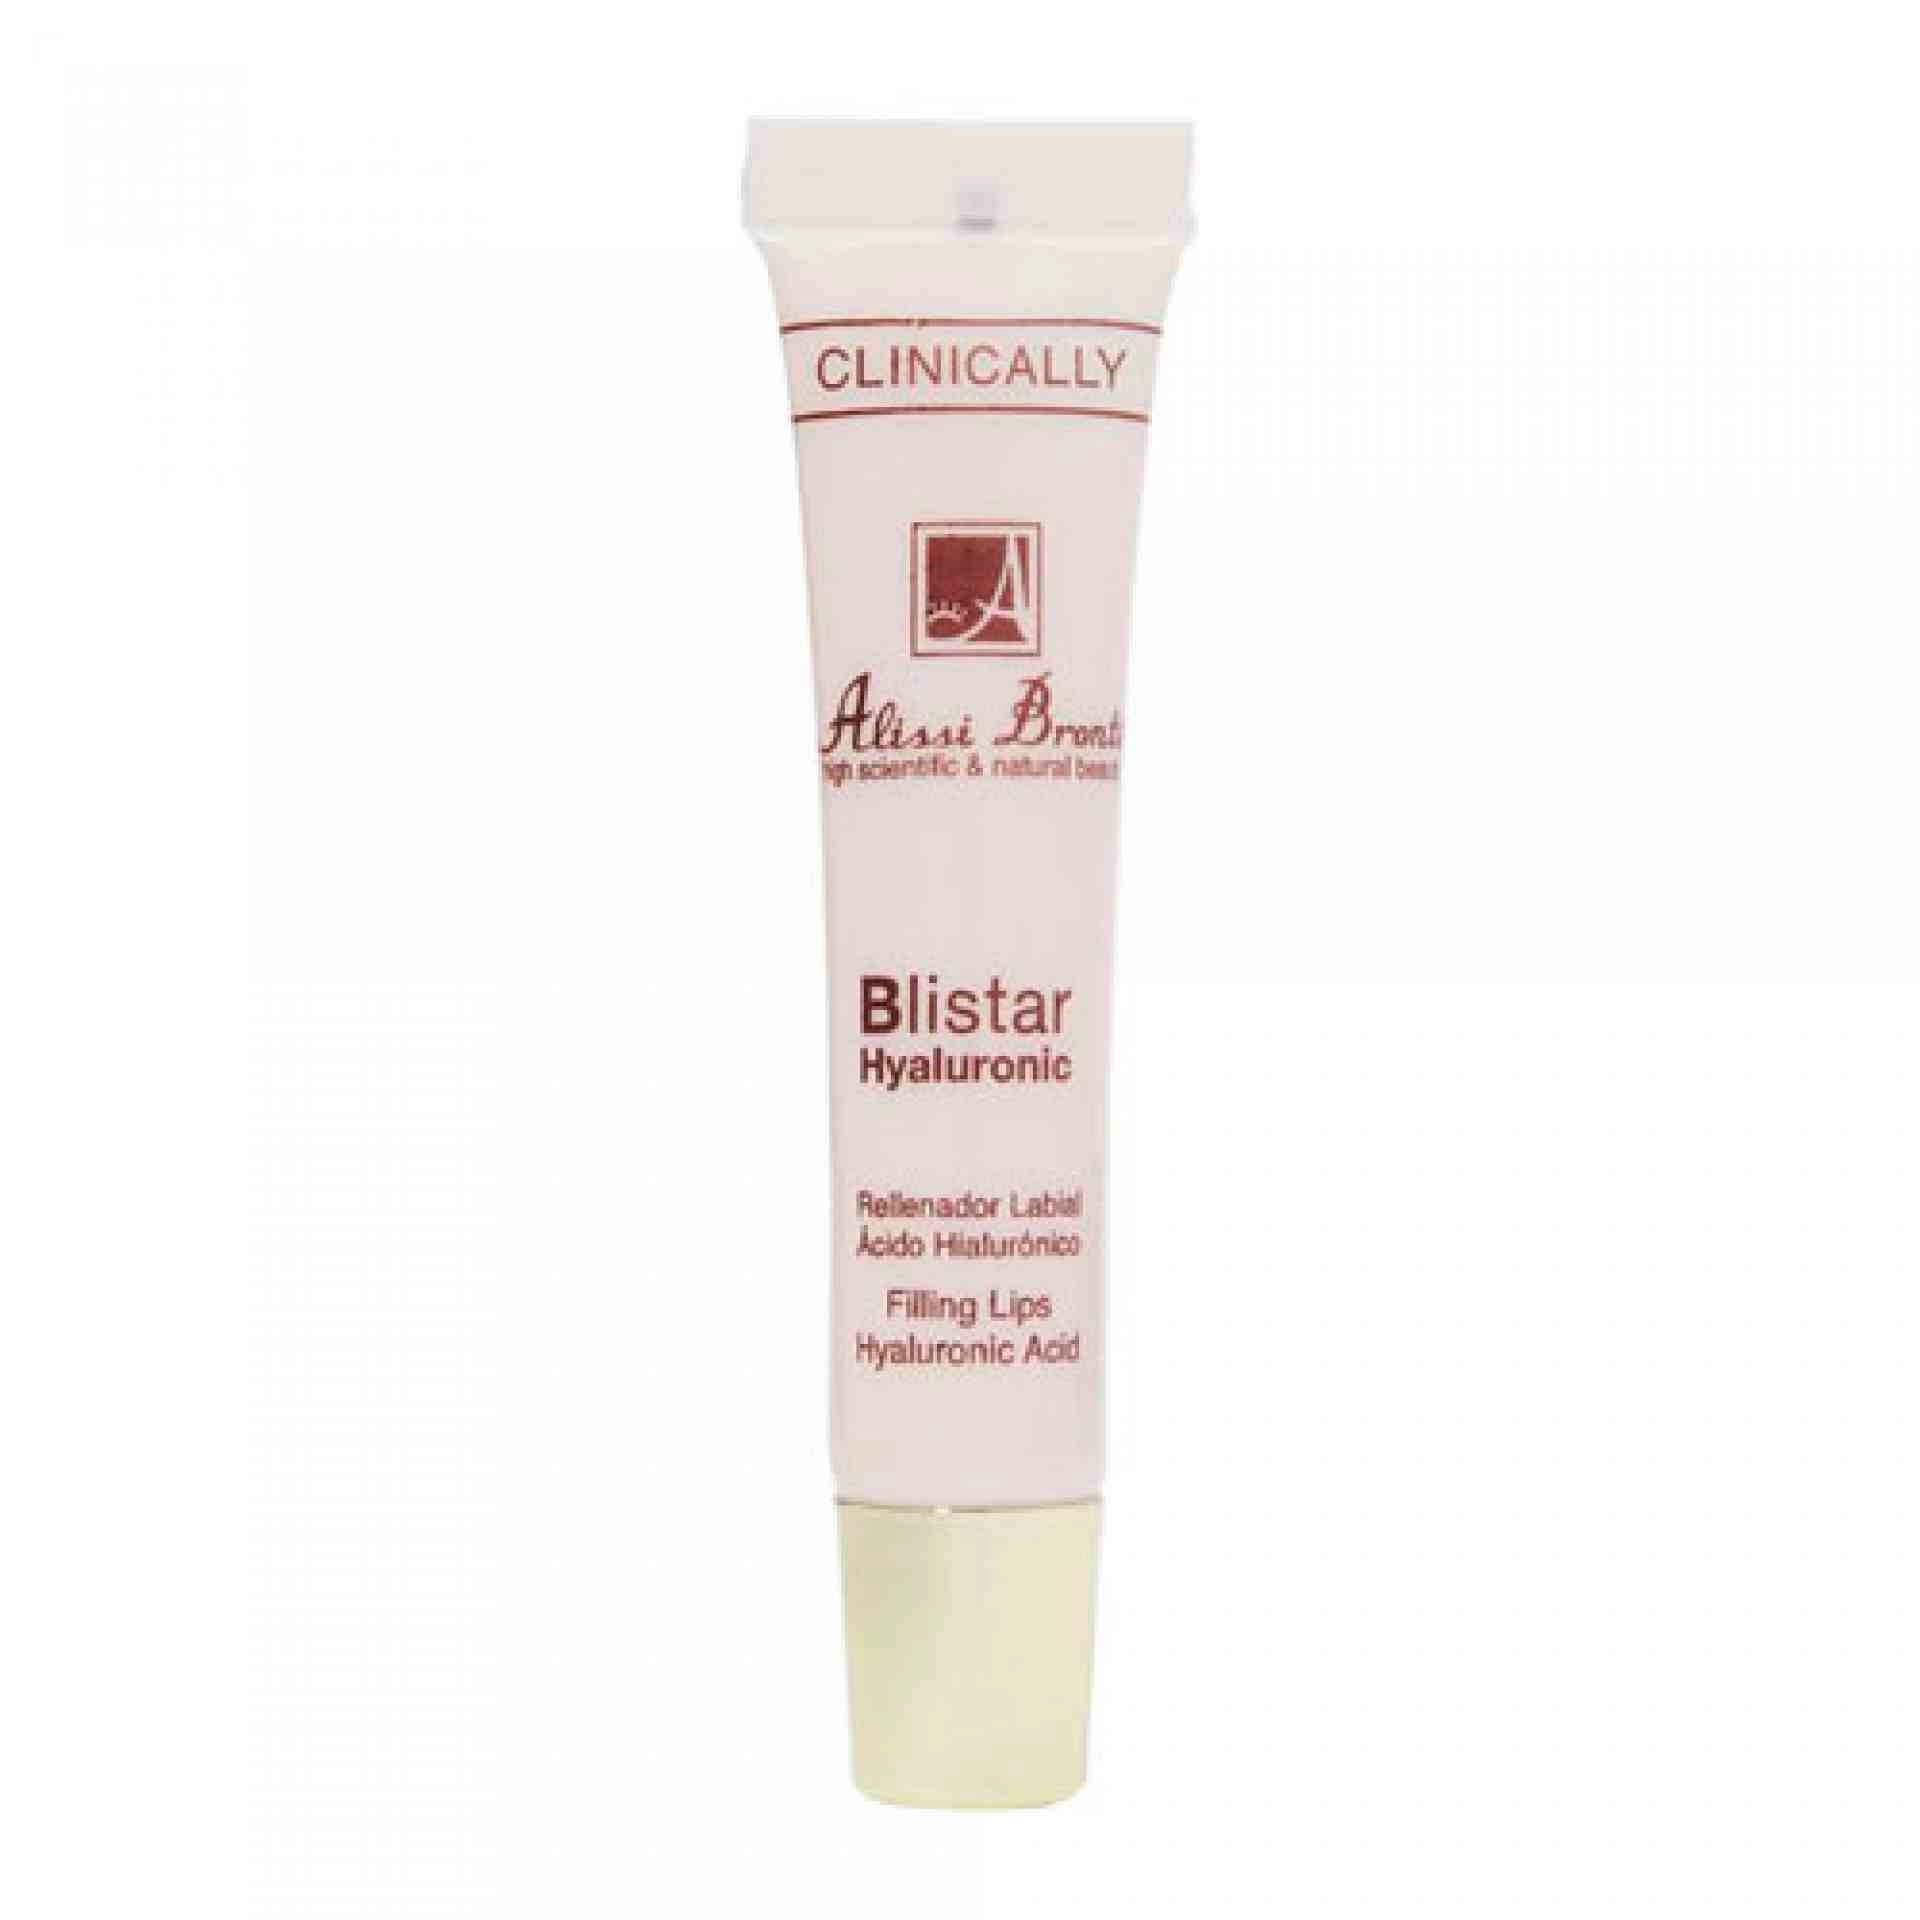 Blistar Hyaluronic | Rellenador labial 15ml - Alissi Brontë ®